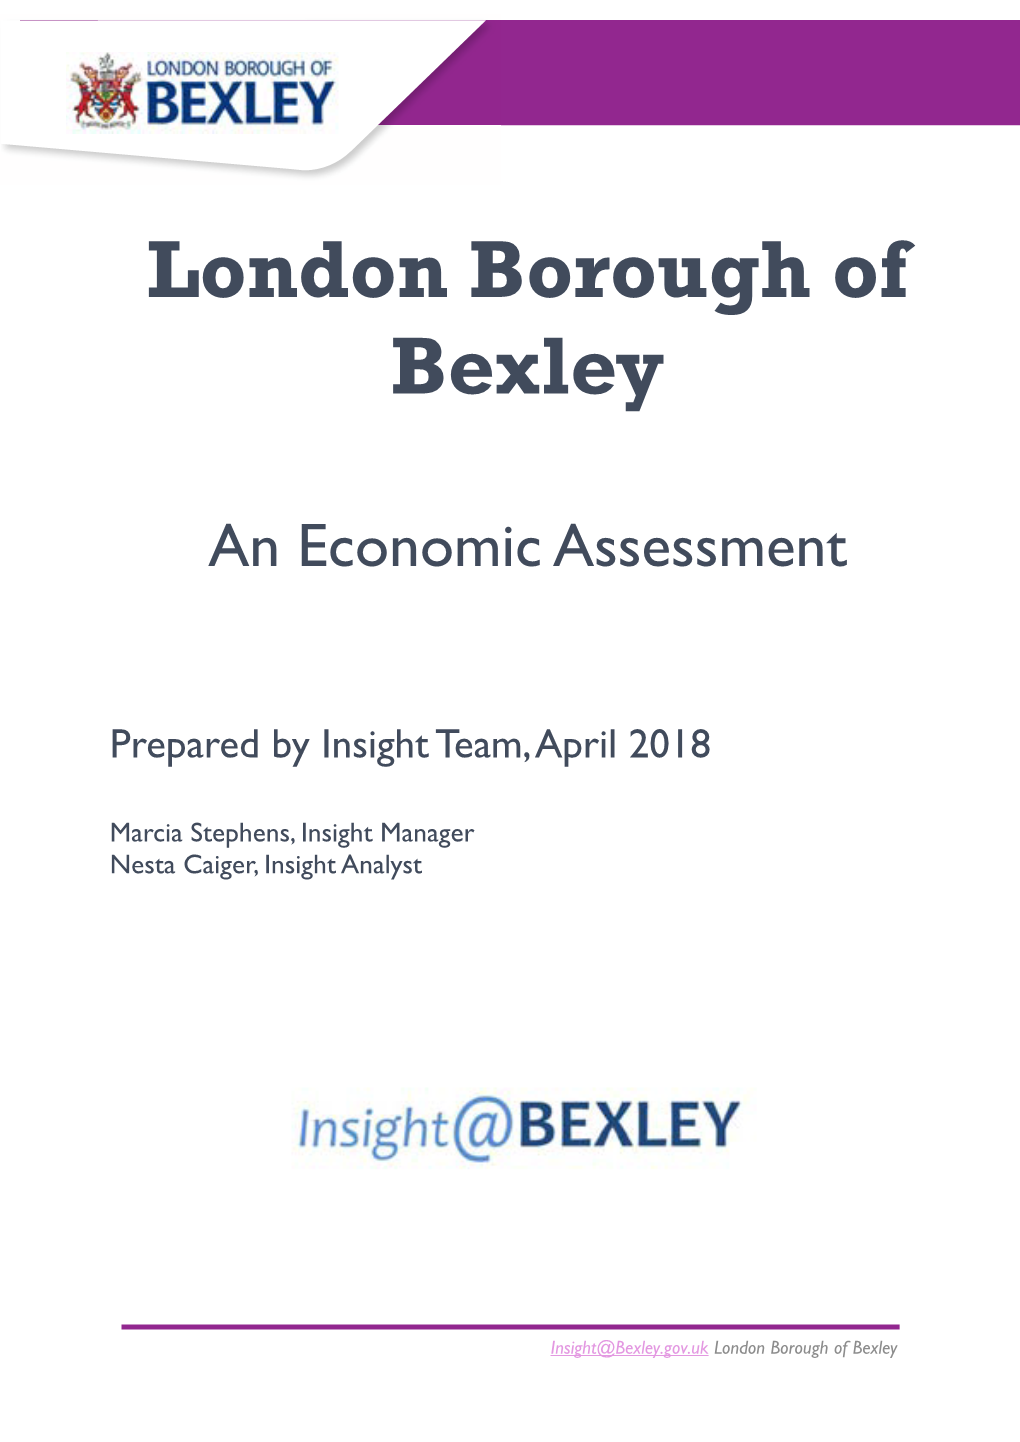 Economic Assessment of the London Borough of Bexley (PDF)